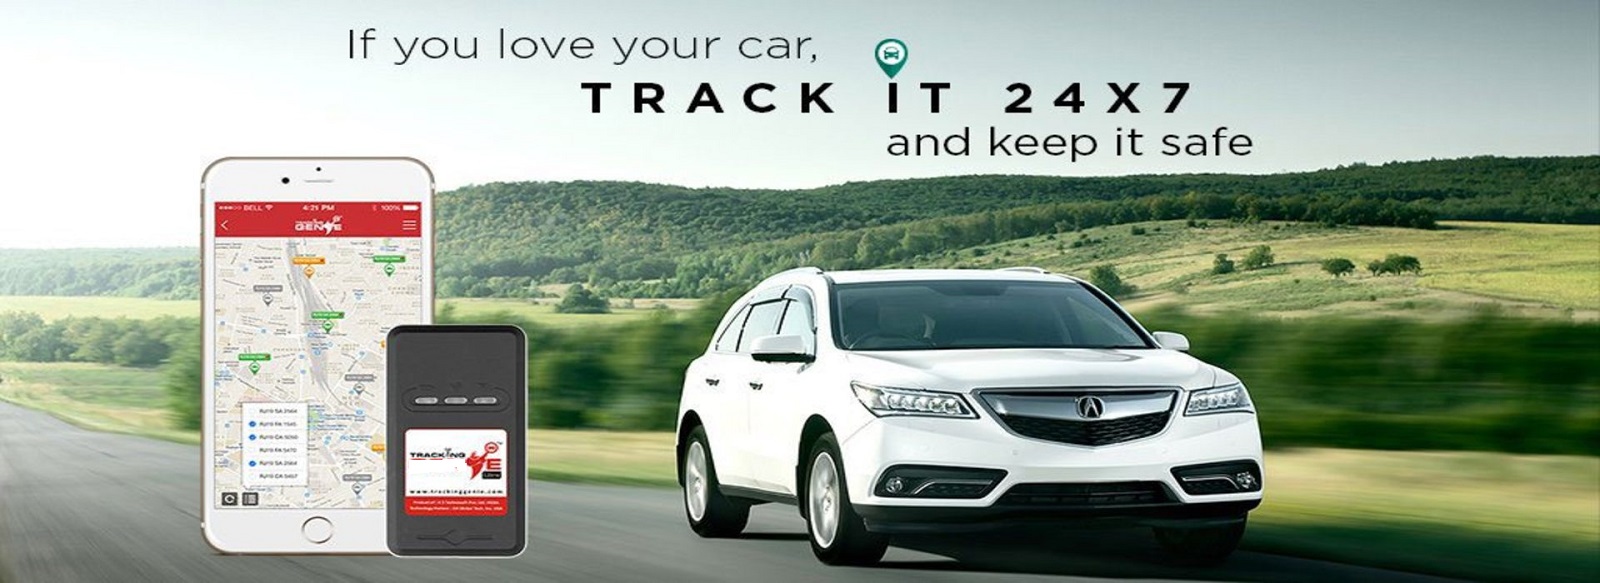 car-tracking